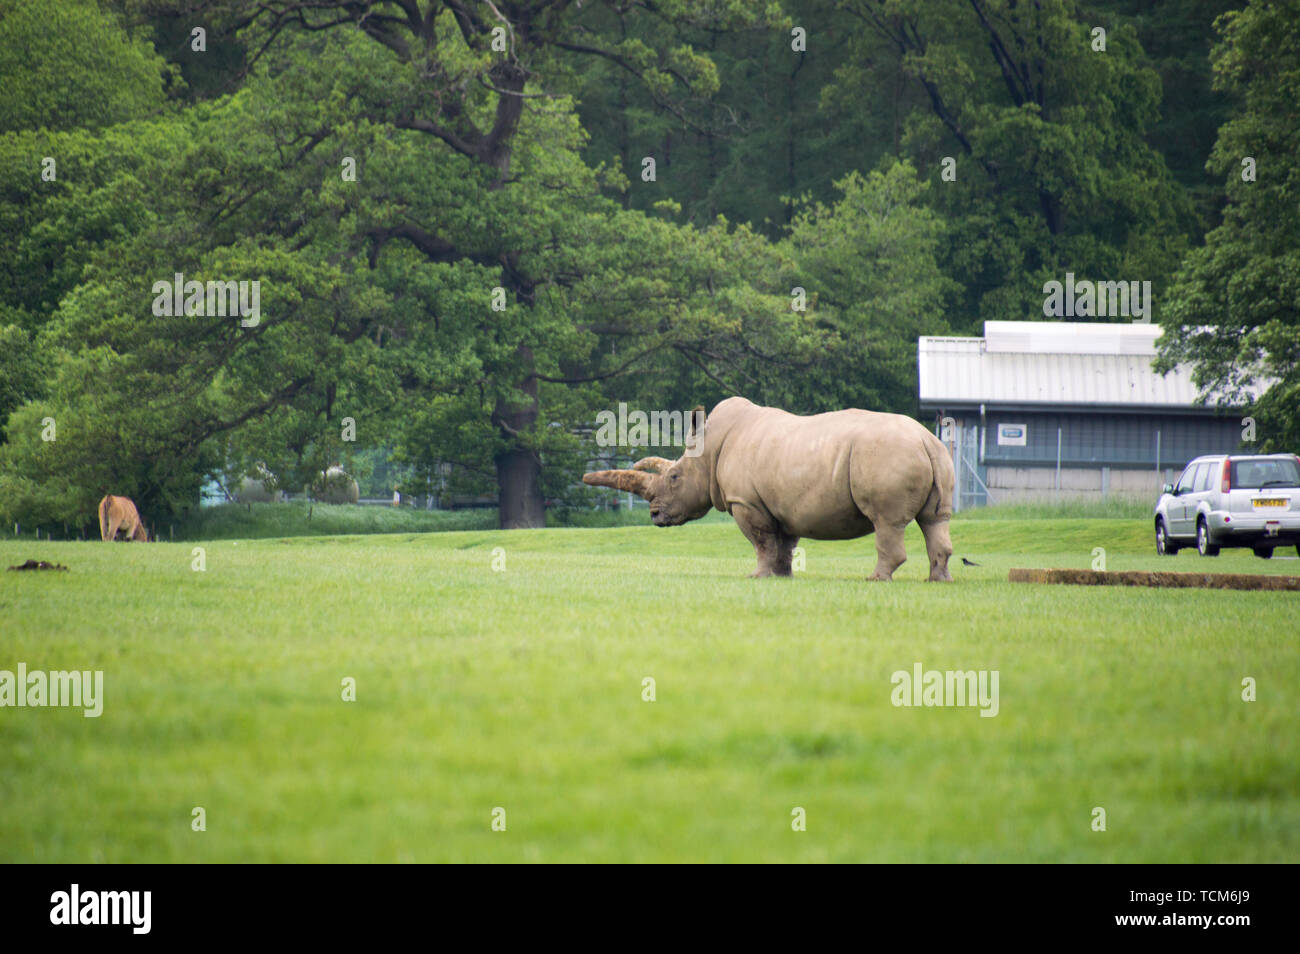 Southern White Rhino (Rhinocerotidae) at Woburn safari park Stock Photo